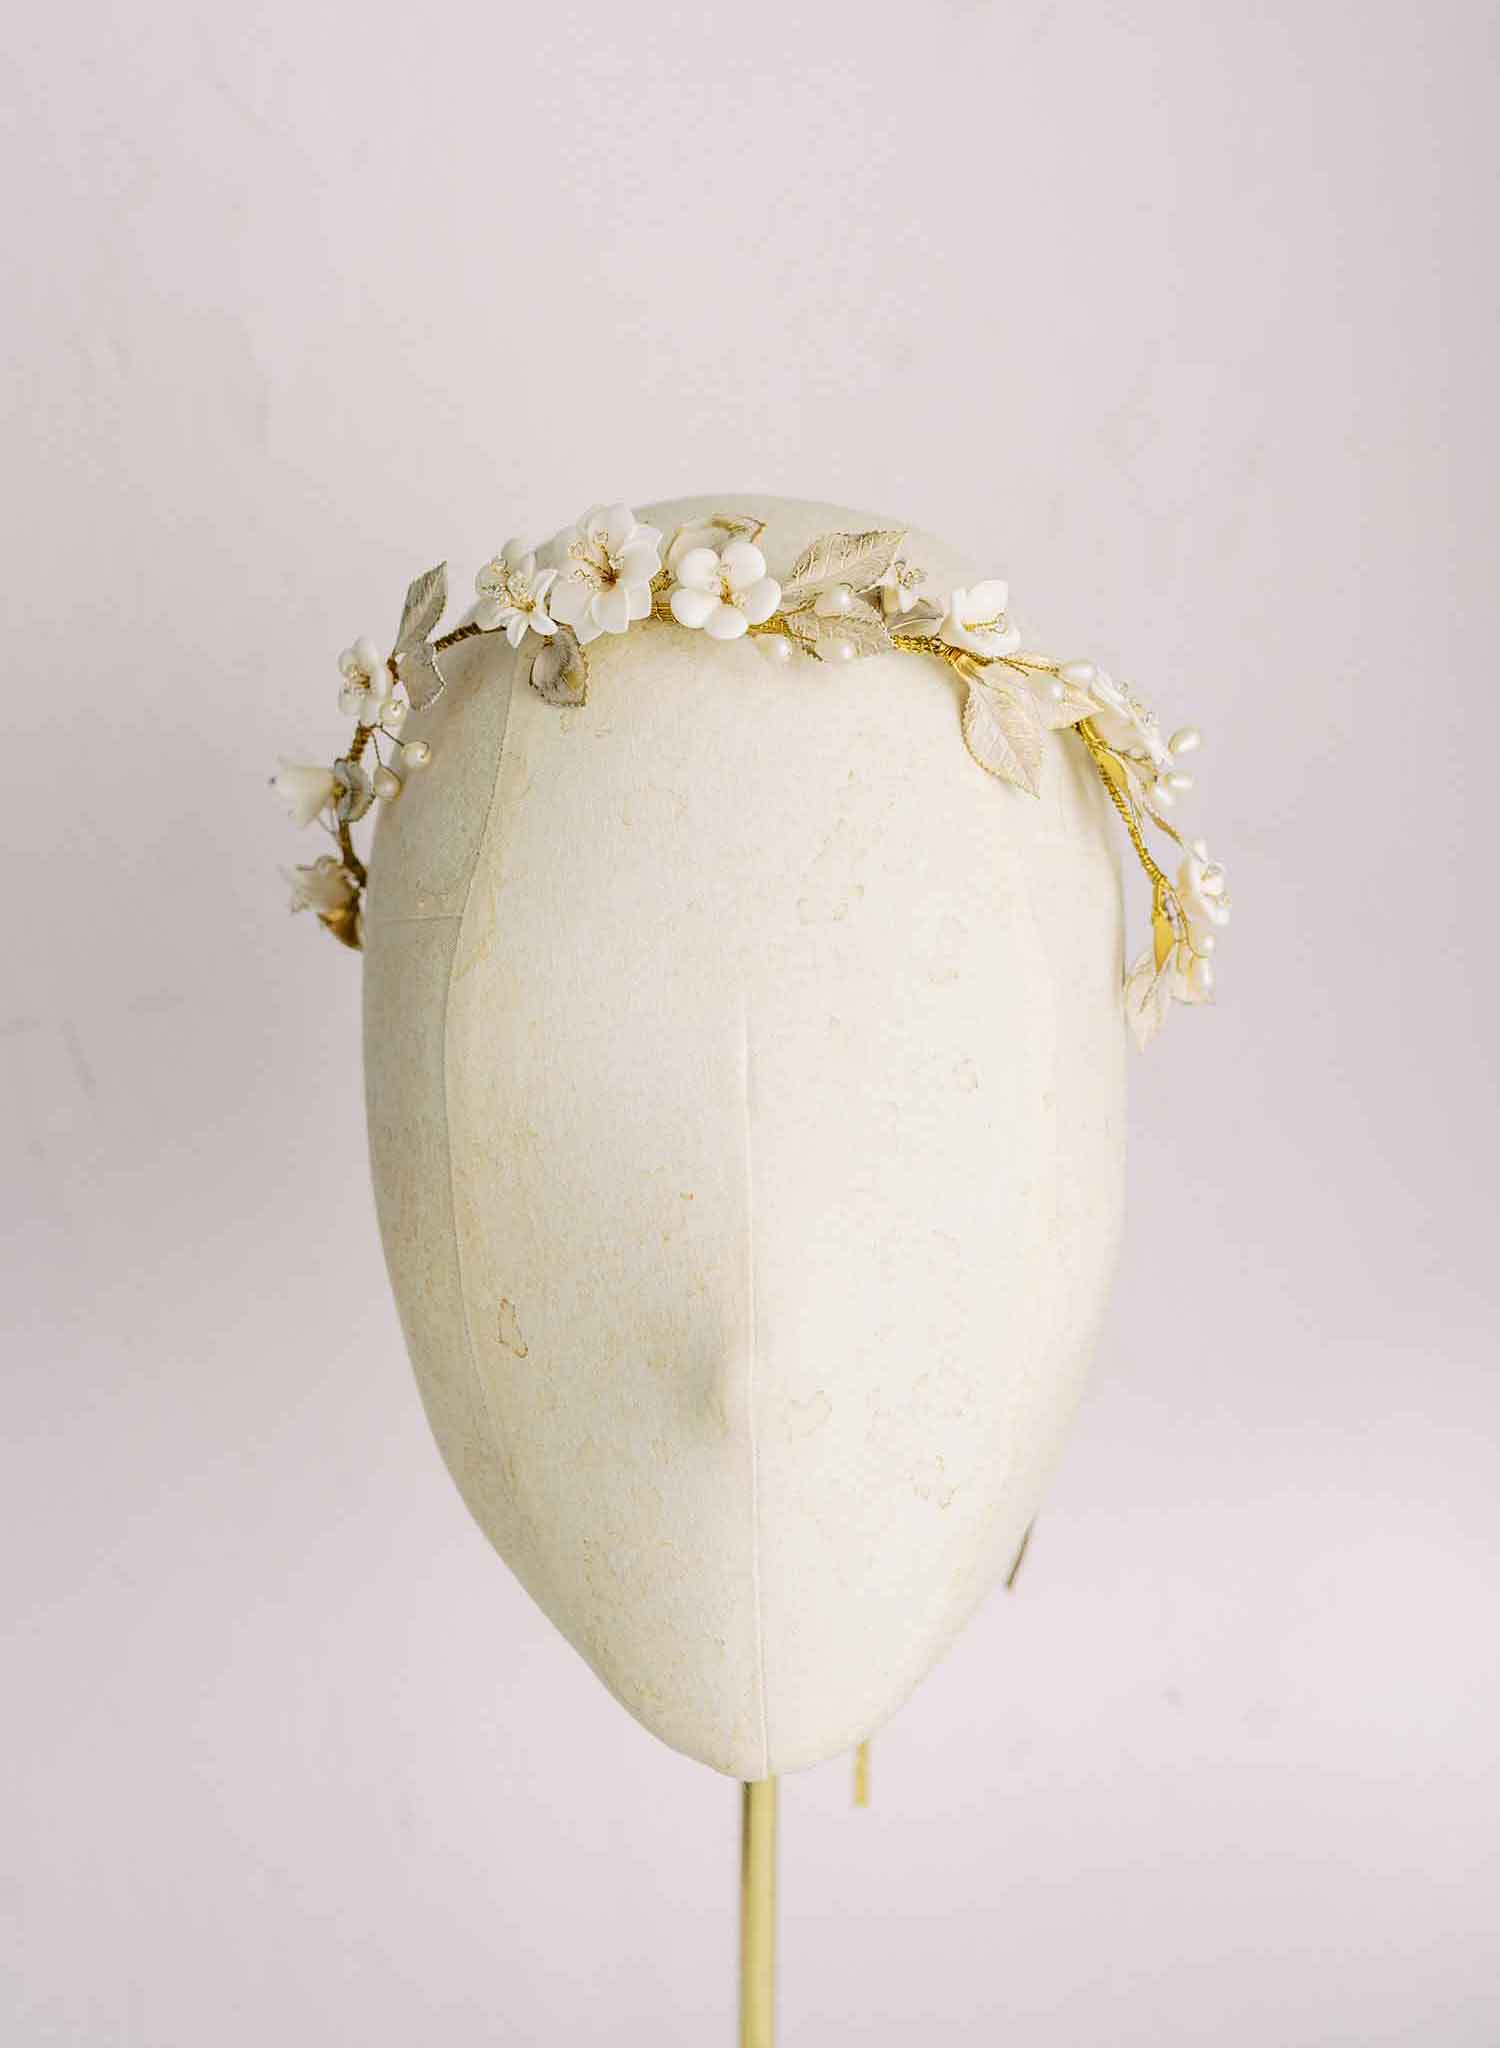 Leonesse floral bridal hair vine - Style #2167